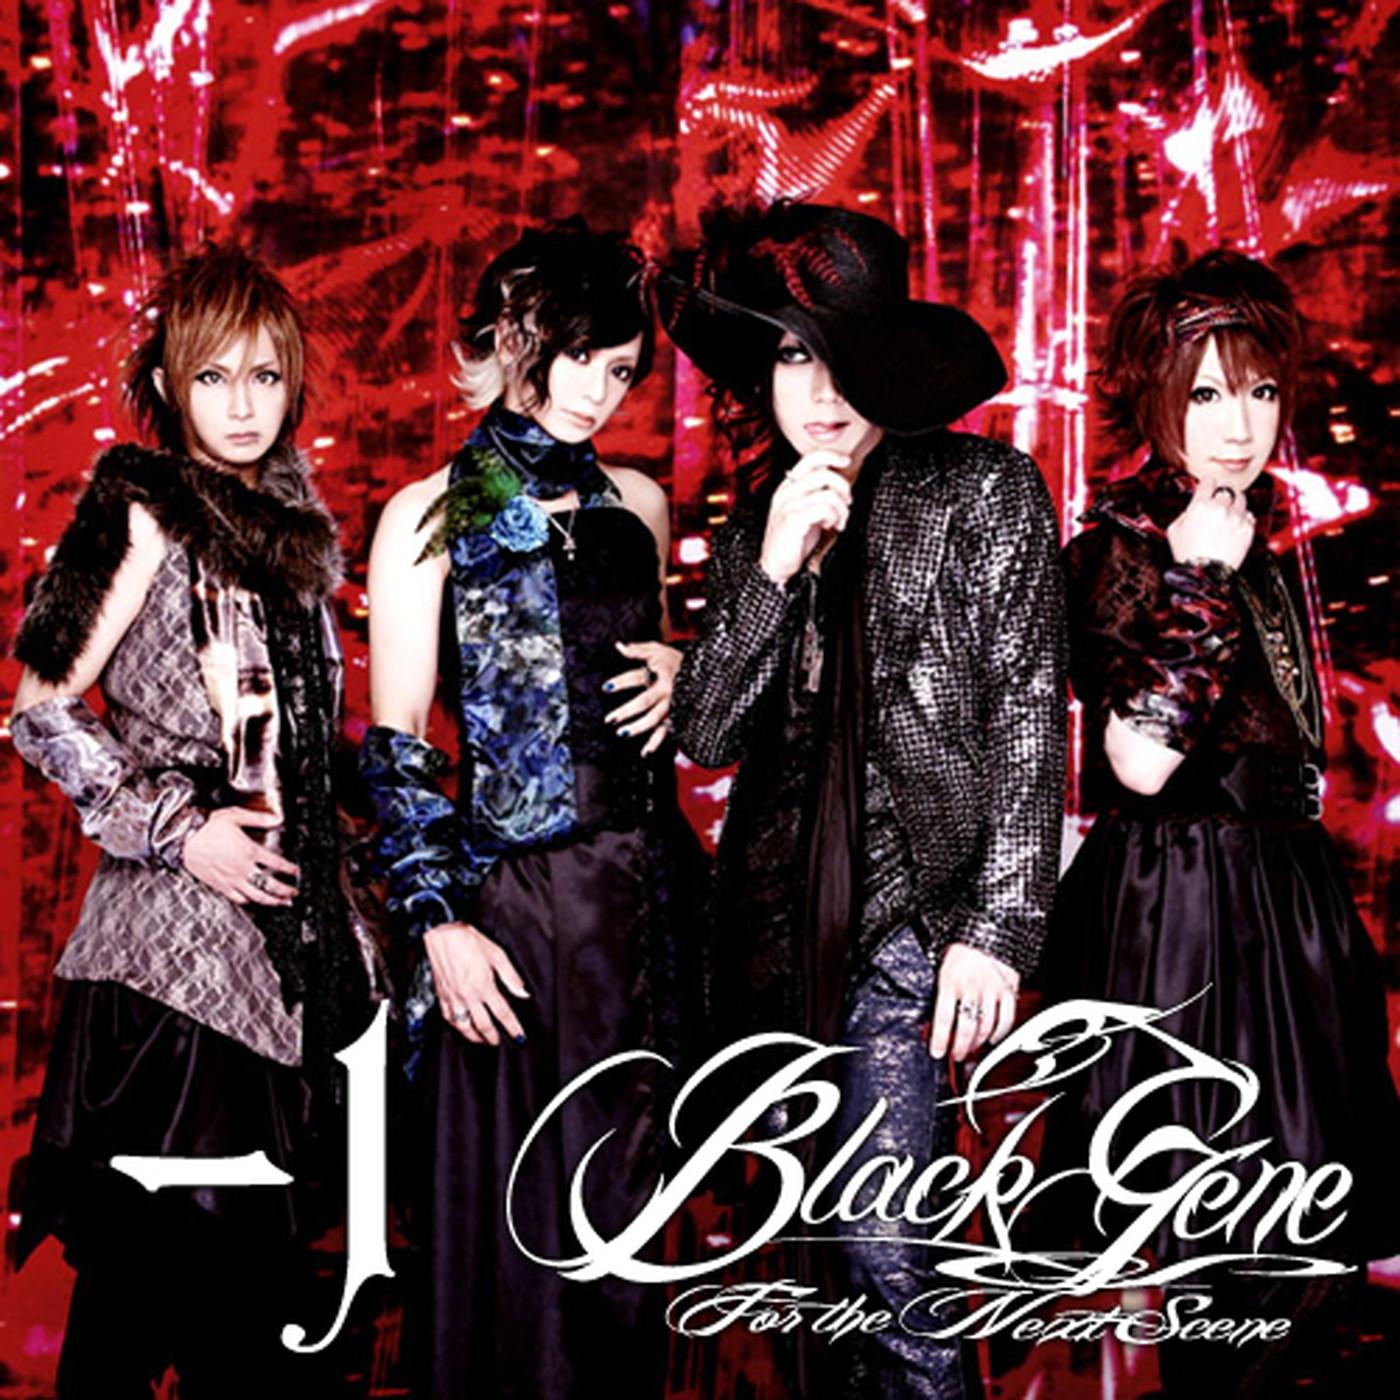 Next scene. Gene Black группа. Black Gene for the next Scene. J Rock субтитры. Kiryu Visual Kei Band Wallpaper.